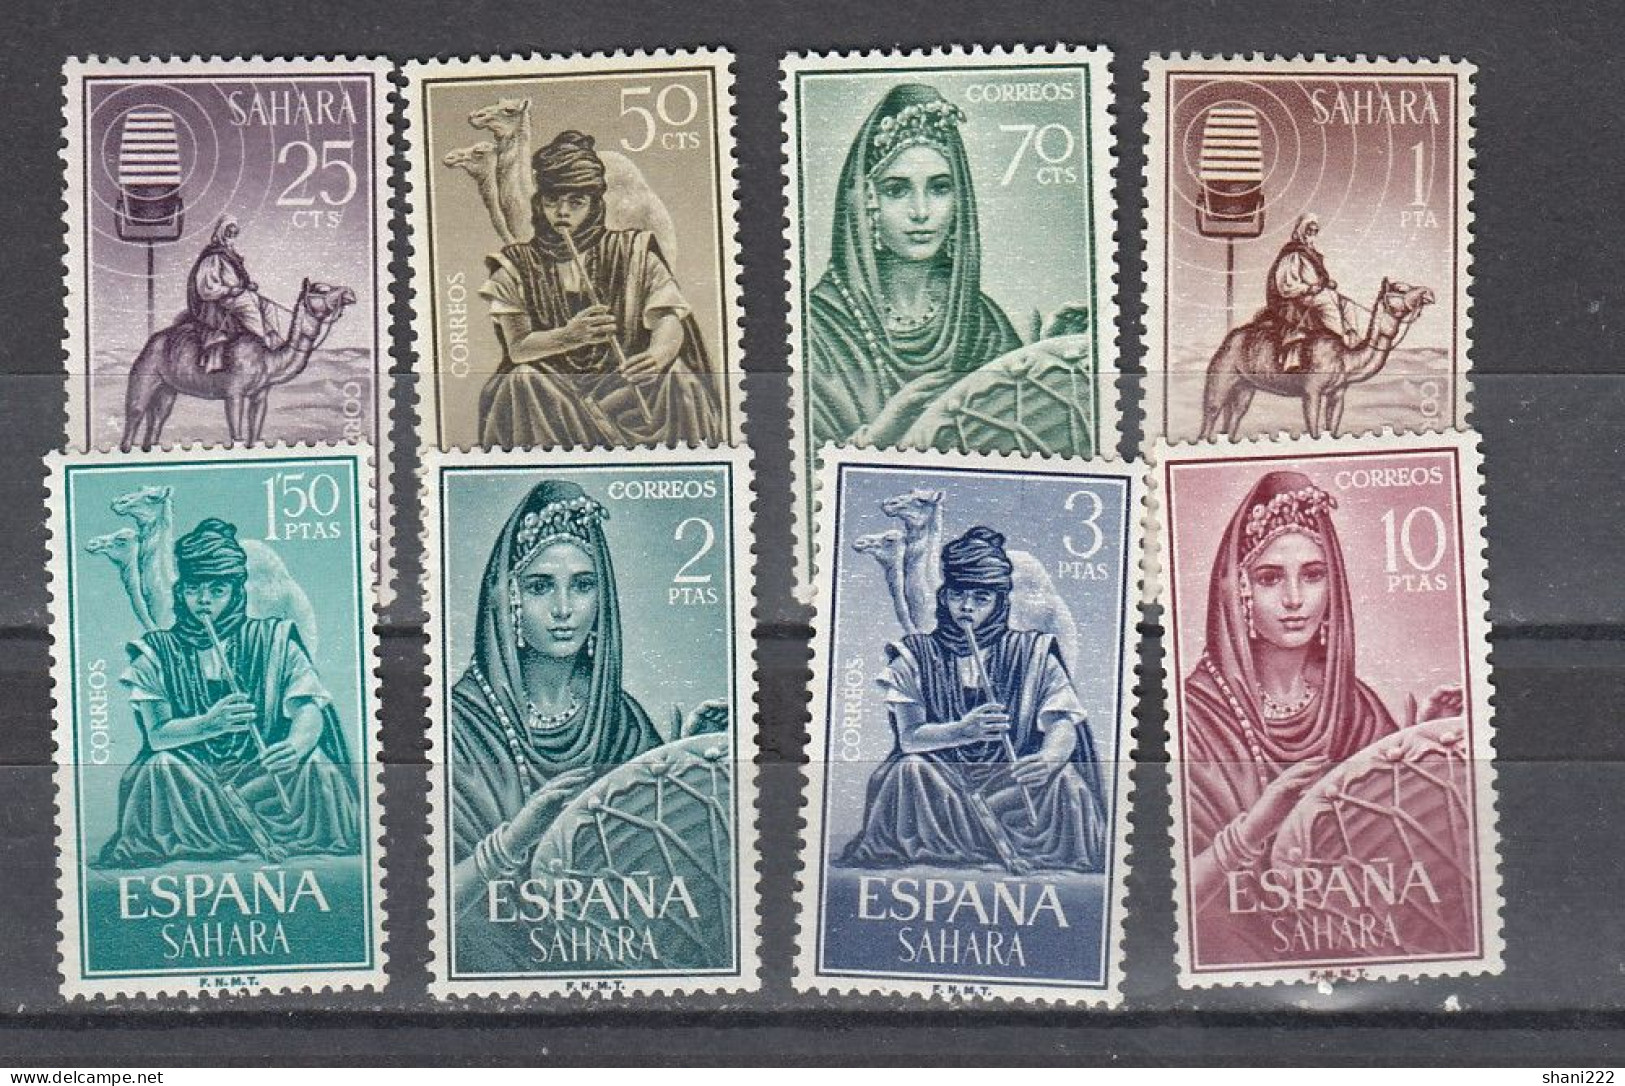 Spanish Sahara 1964 Definitives, Nomads, MNH Set  (e-865) - Spanische Sahara